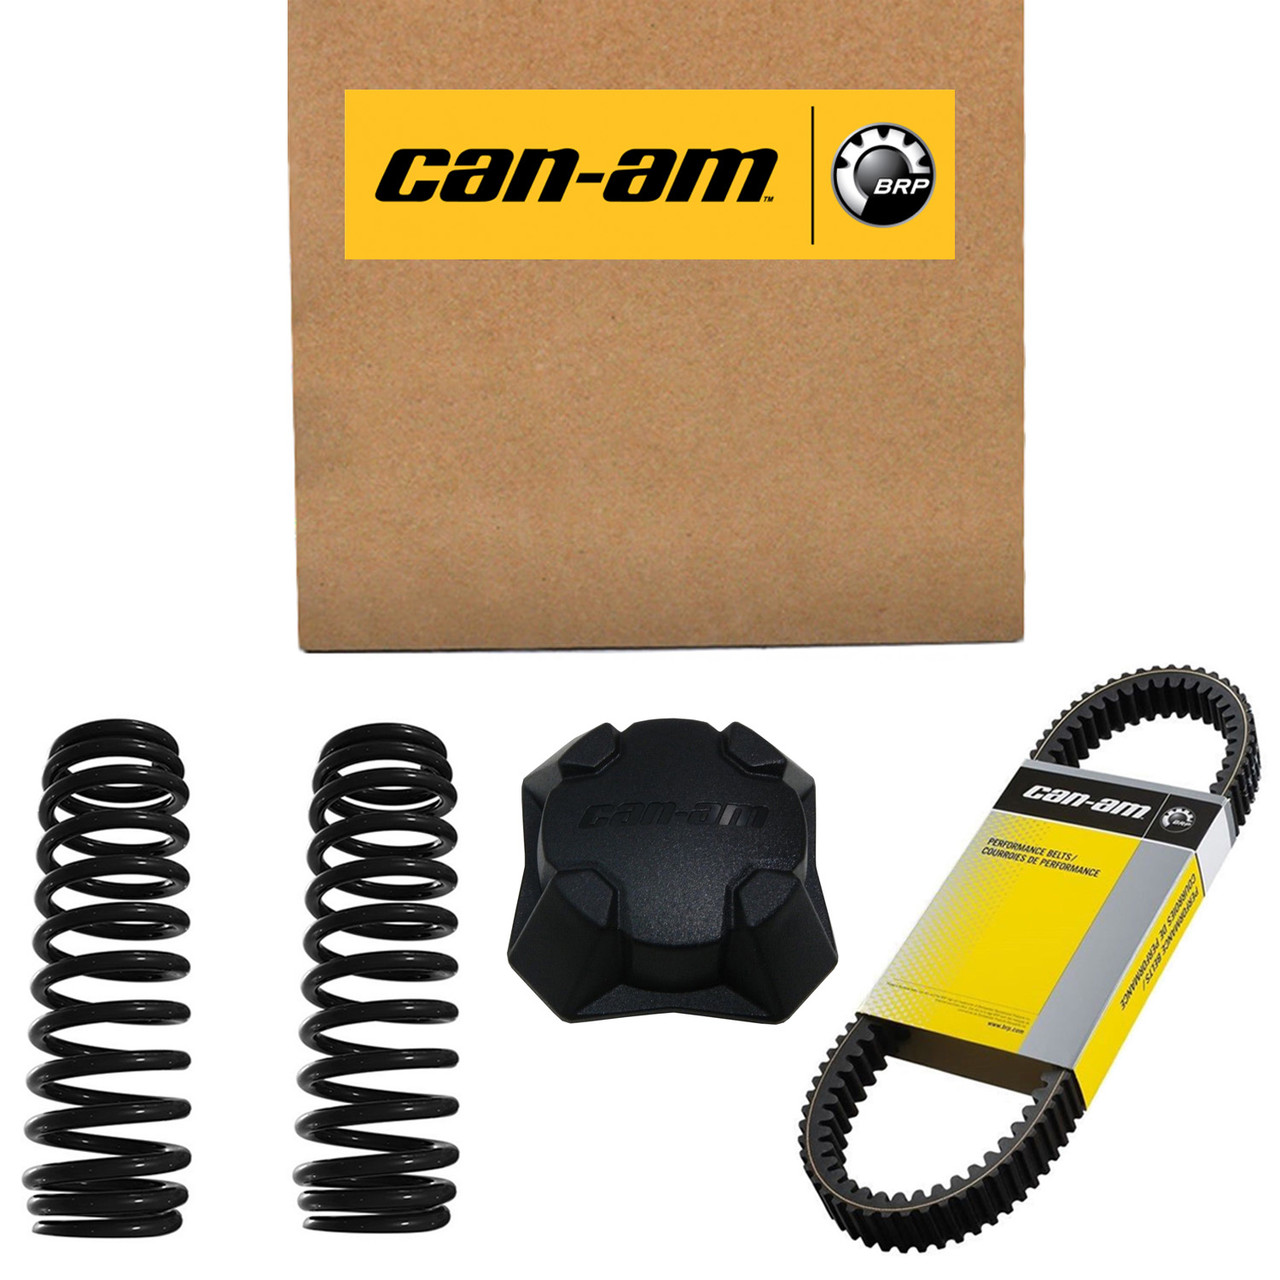 Can-Am New OEM Seat_Passenger Kit F3, 219400975